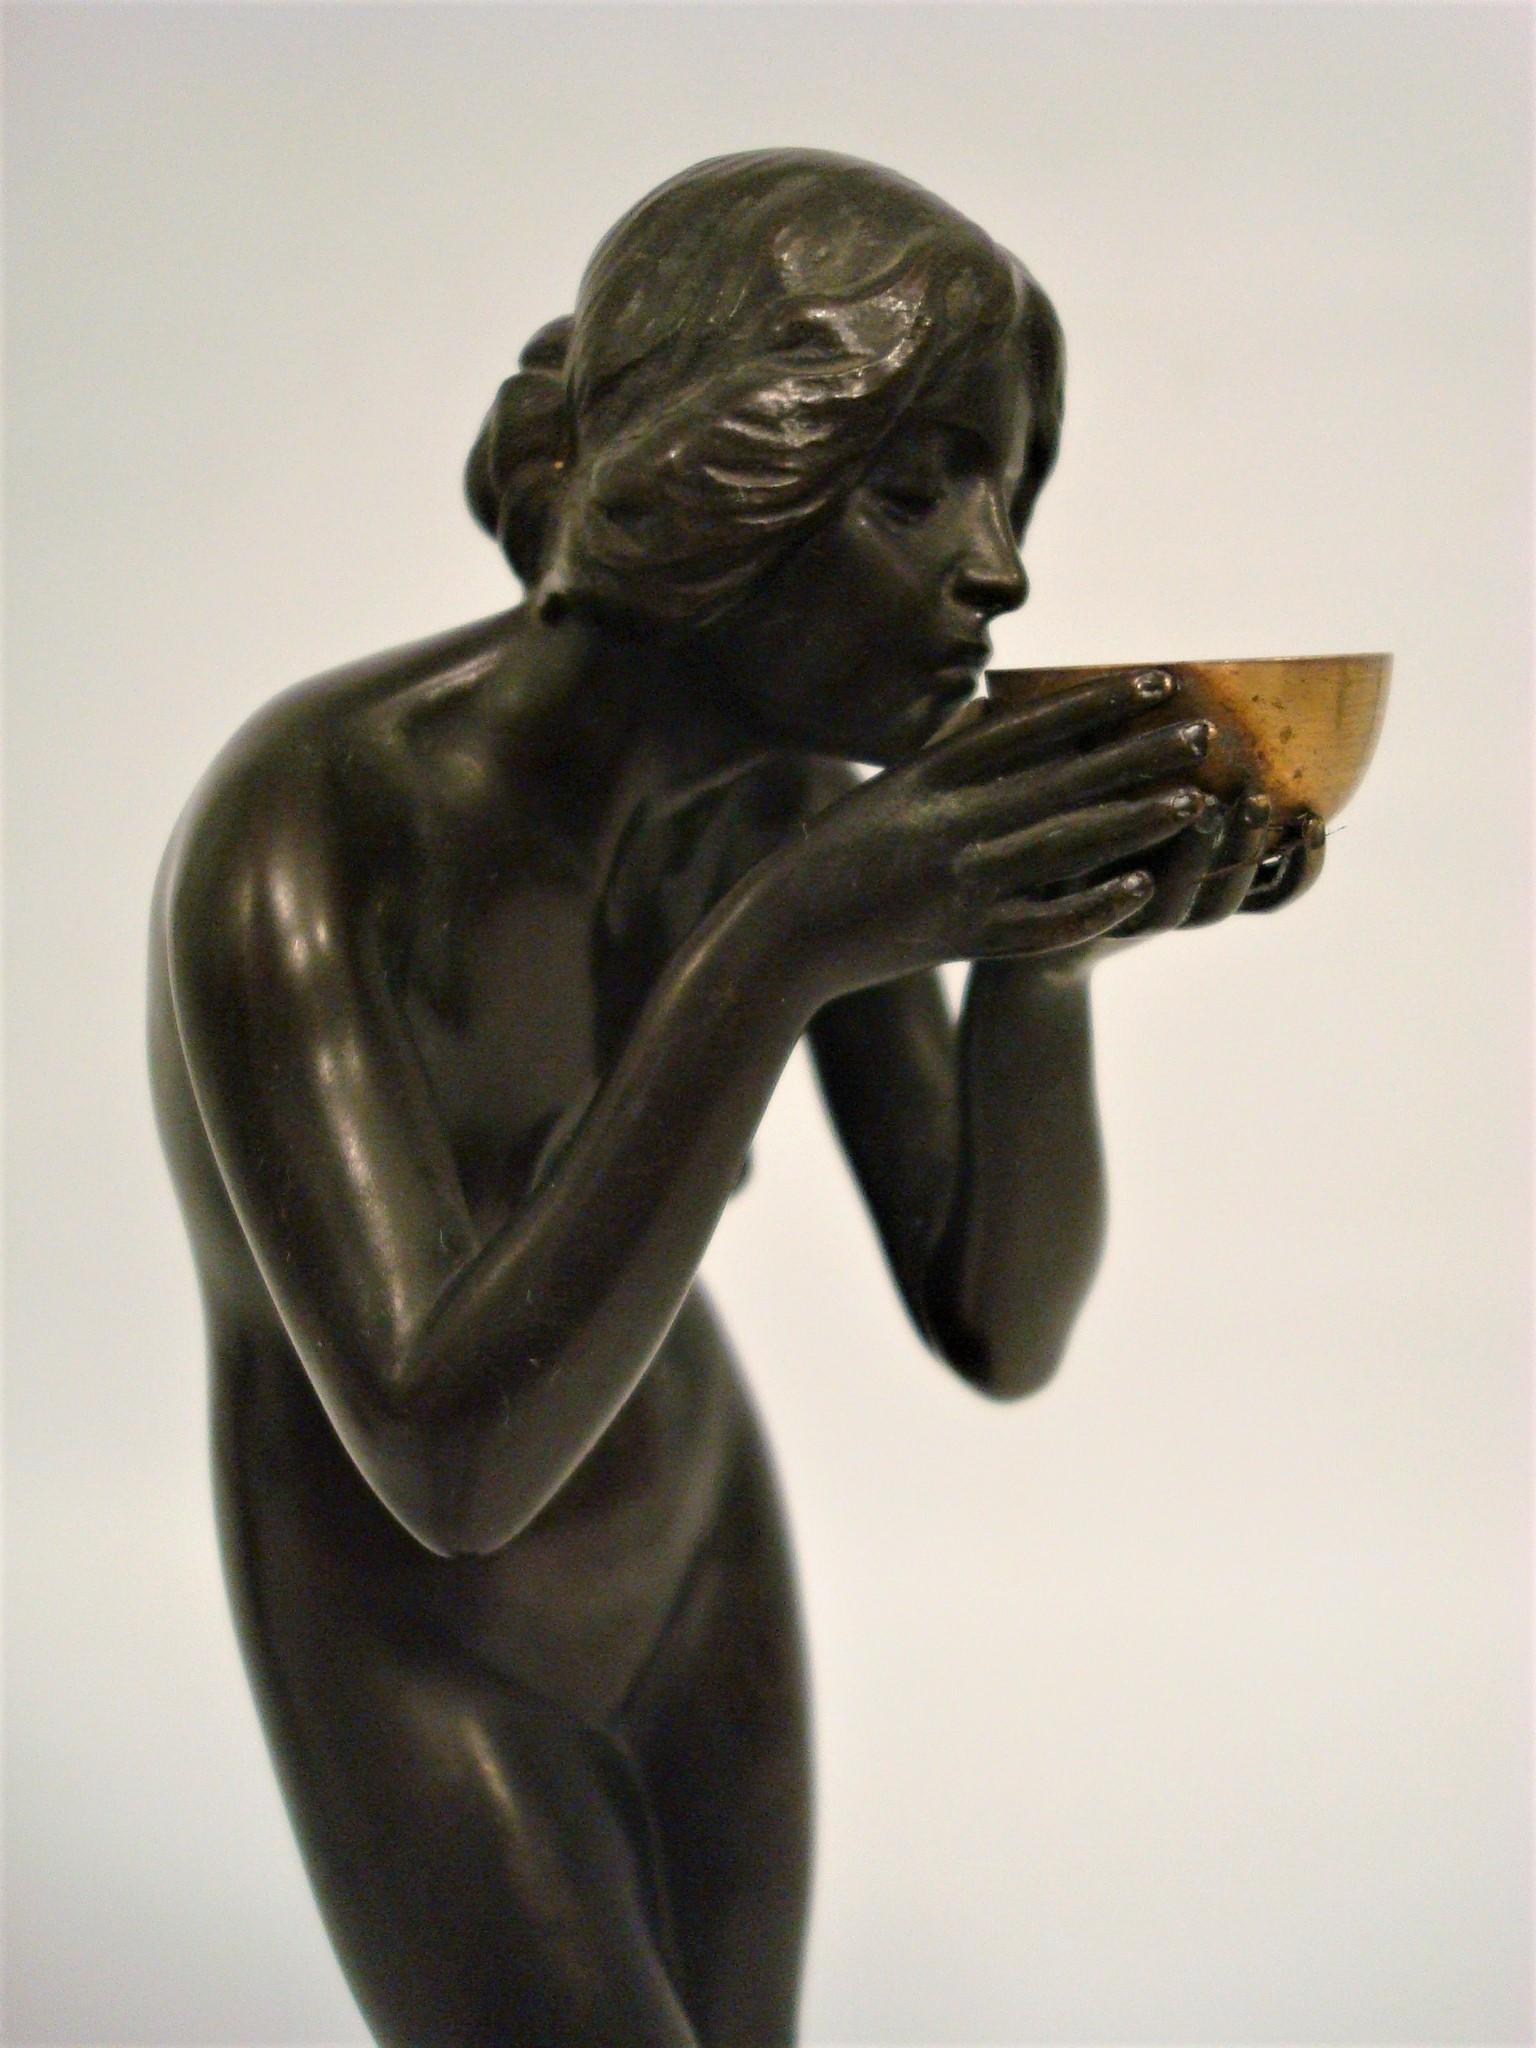 Art Nouveau Art Deco Bronze Sculpture a Nude Lady Drinking from a Cup Victor Heinri Seifert 